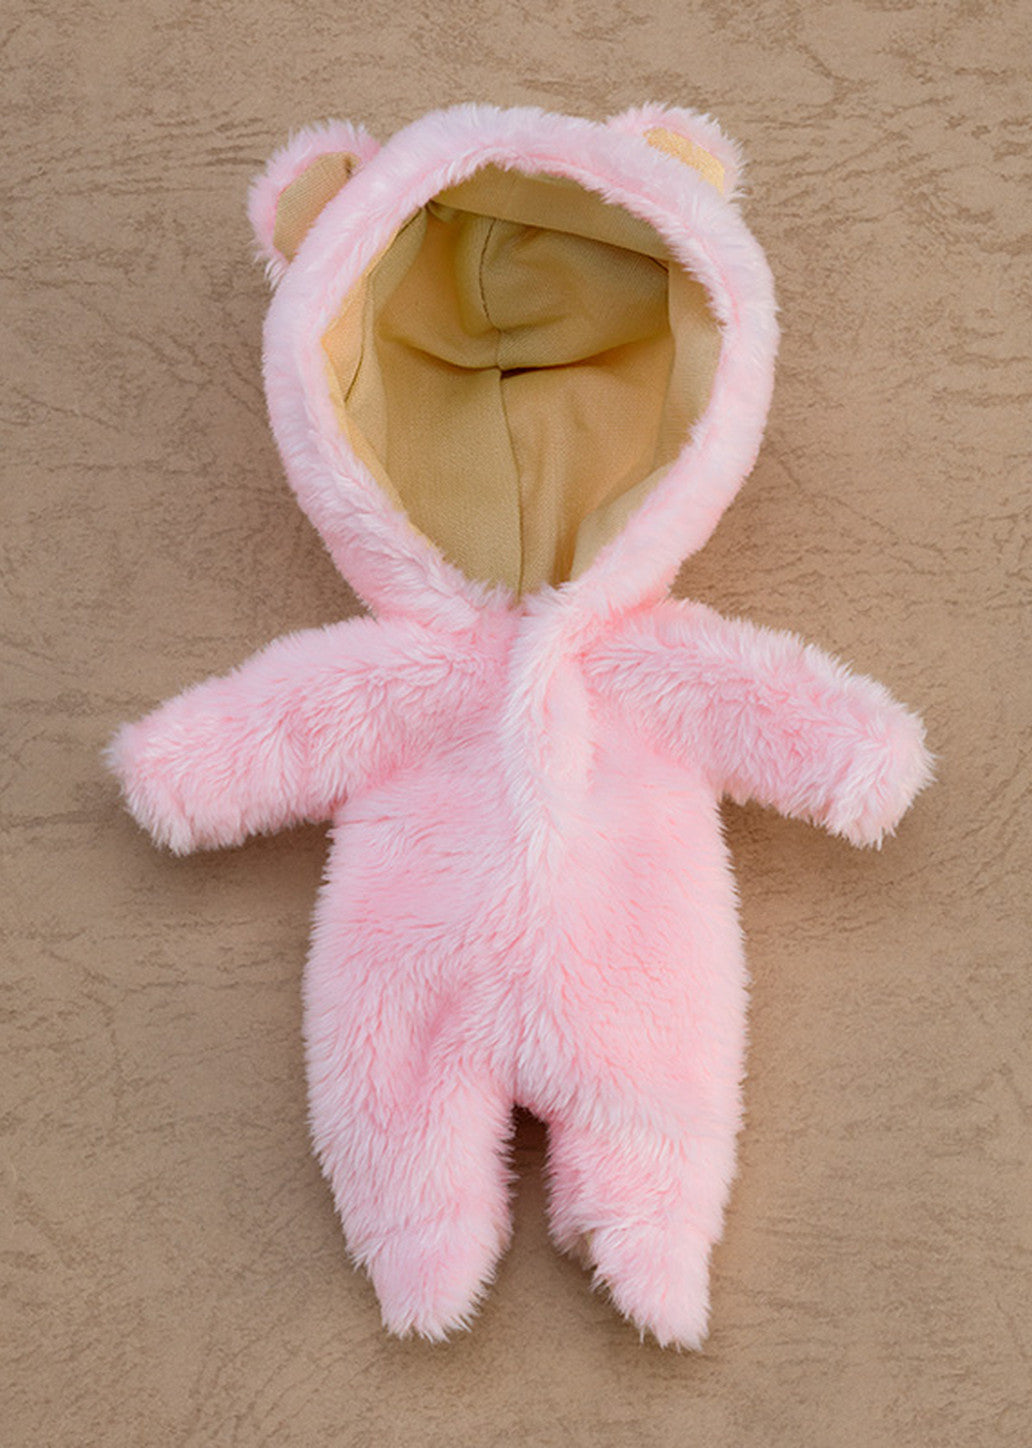 Nendoroid Doll: Kigurumi Pajamas (Bear - Pink)